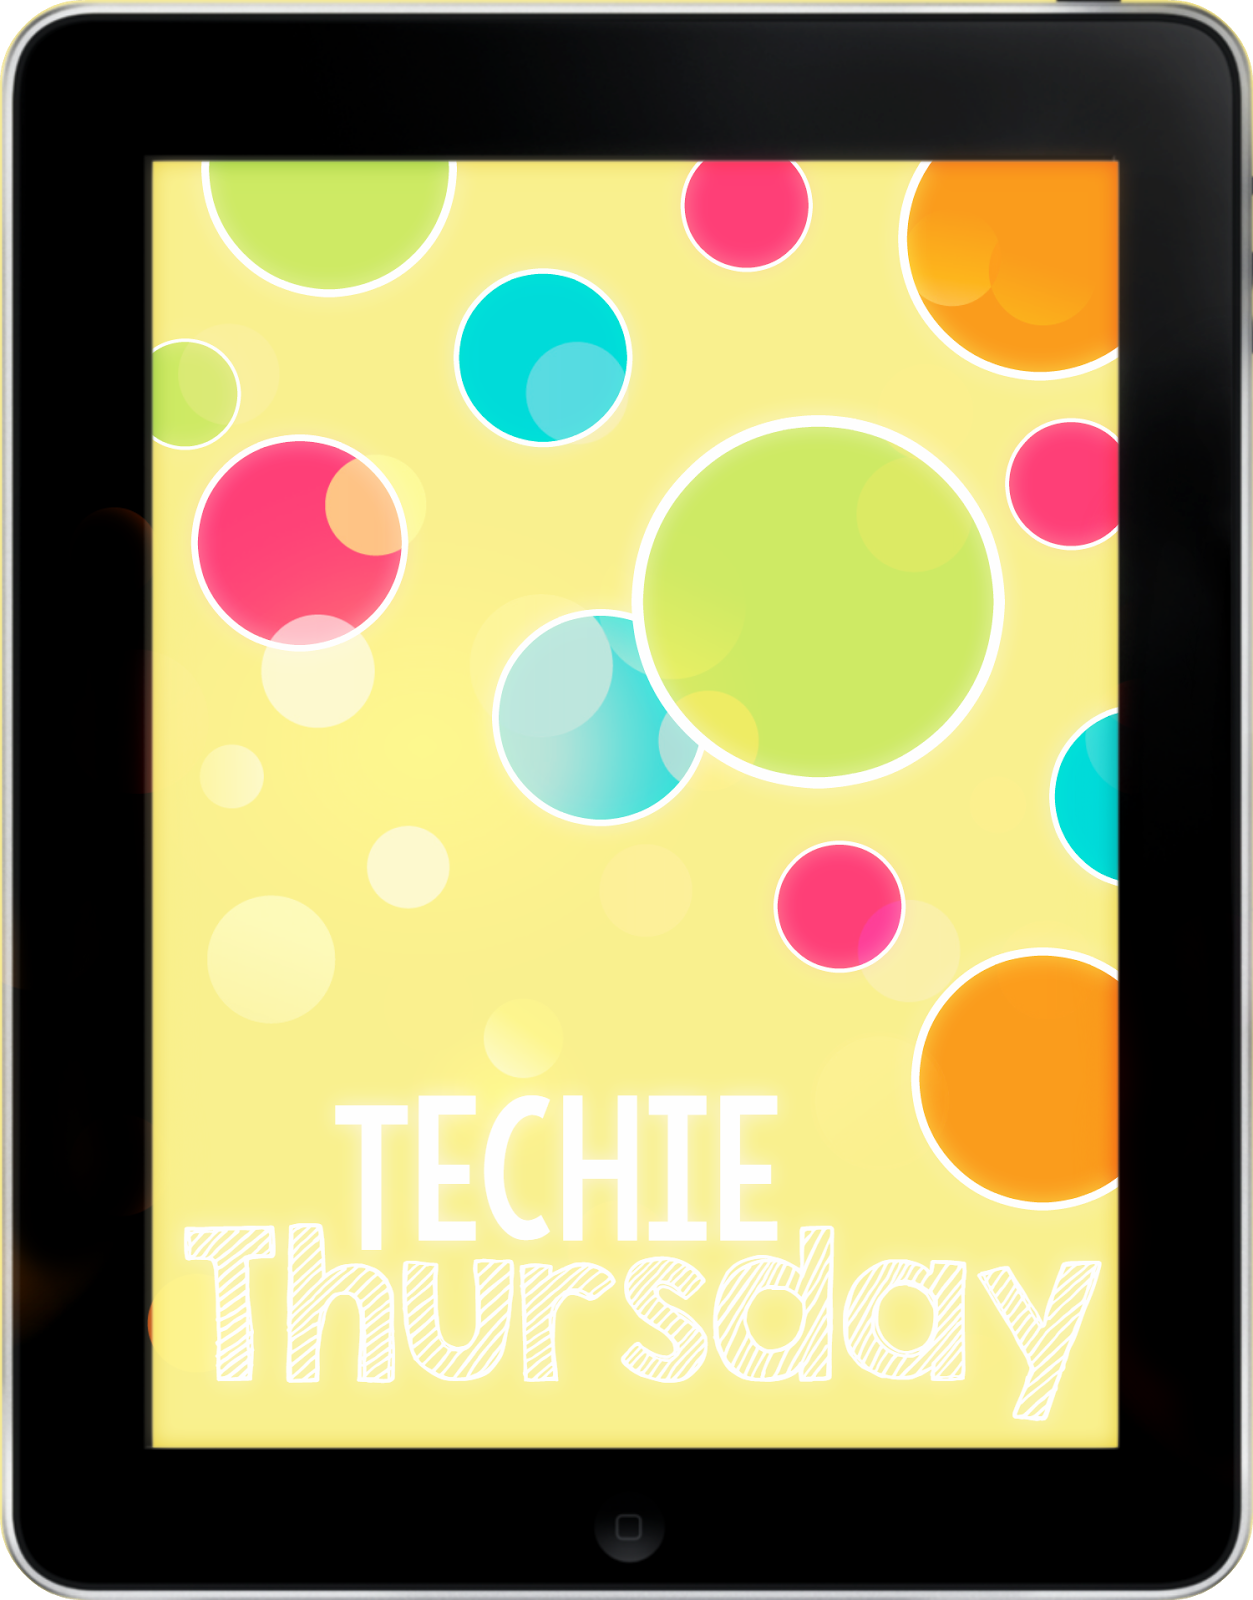 Techie Thursday